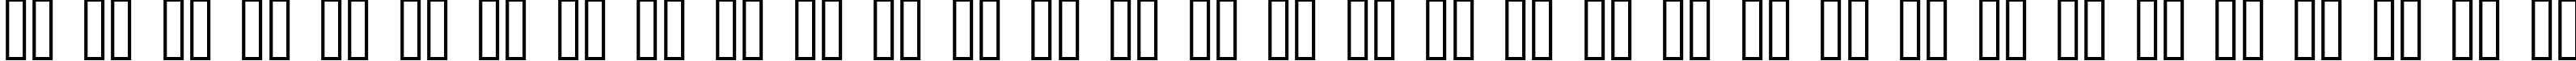 Пример написания русского алфавита шрифтом Knuckle Sandwich Classic Italic